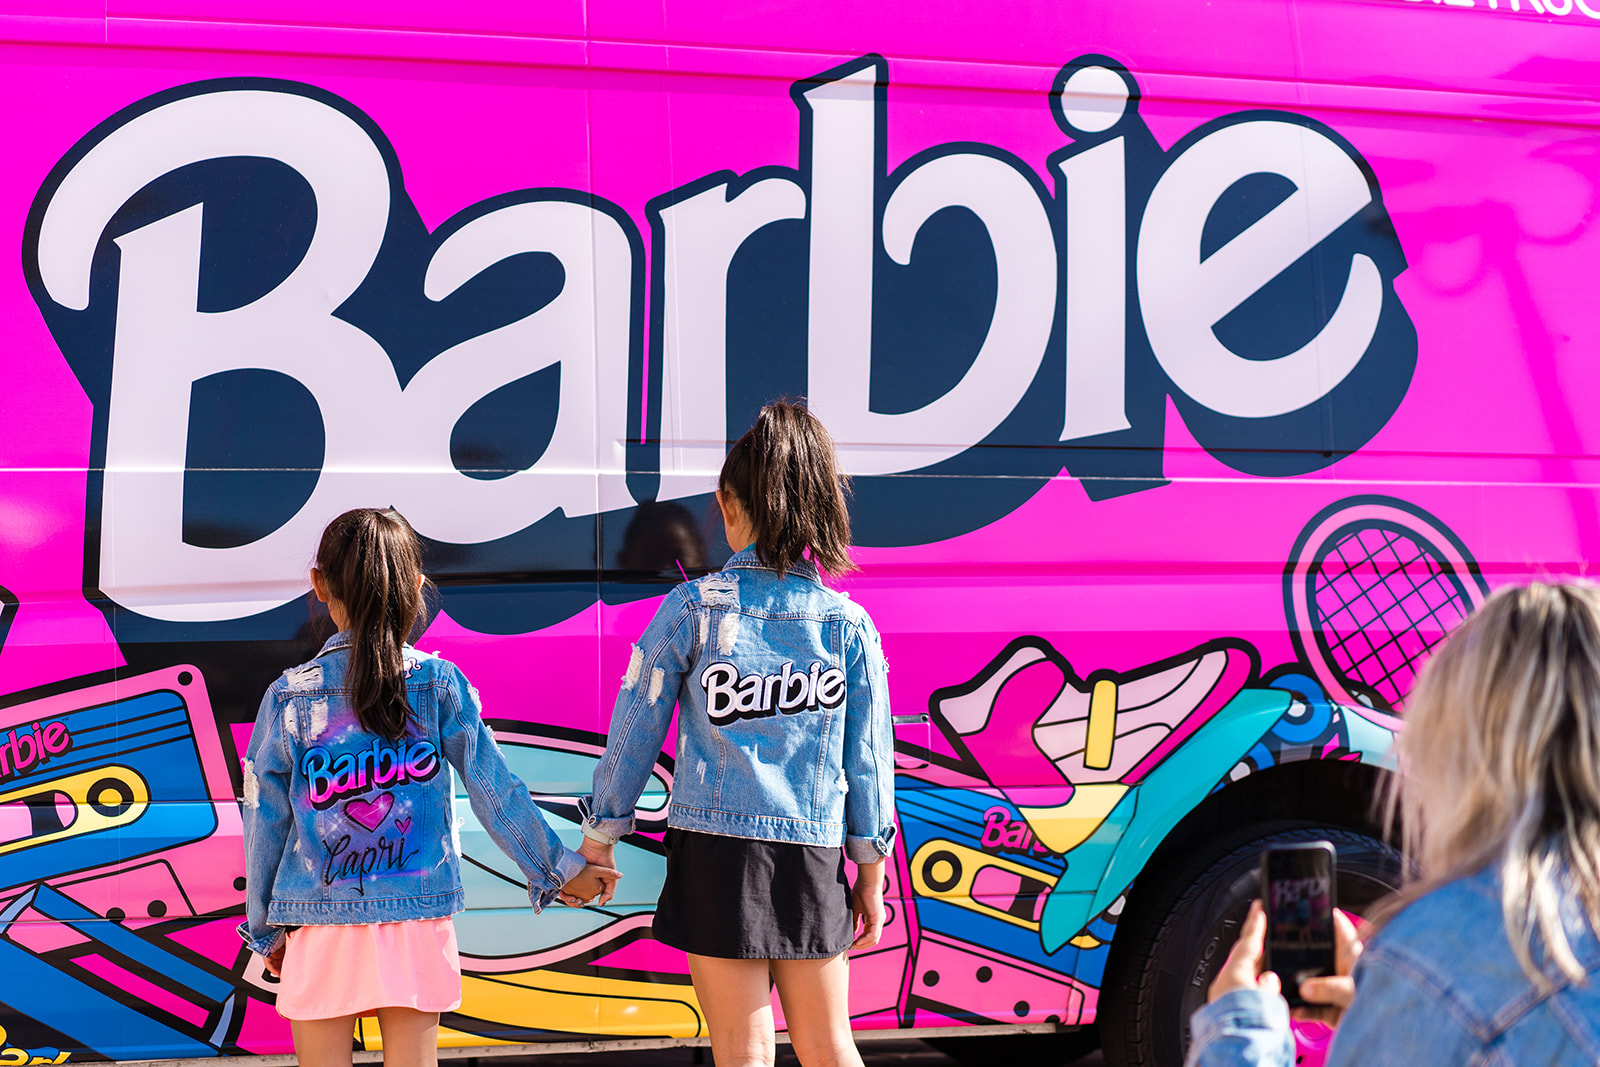 Barbie Malibu Tour 2021 pop-up truck